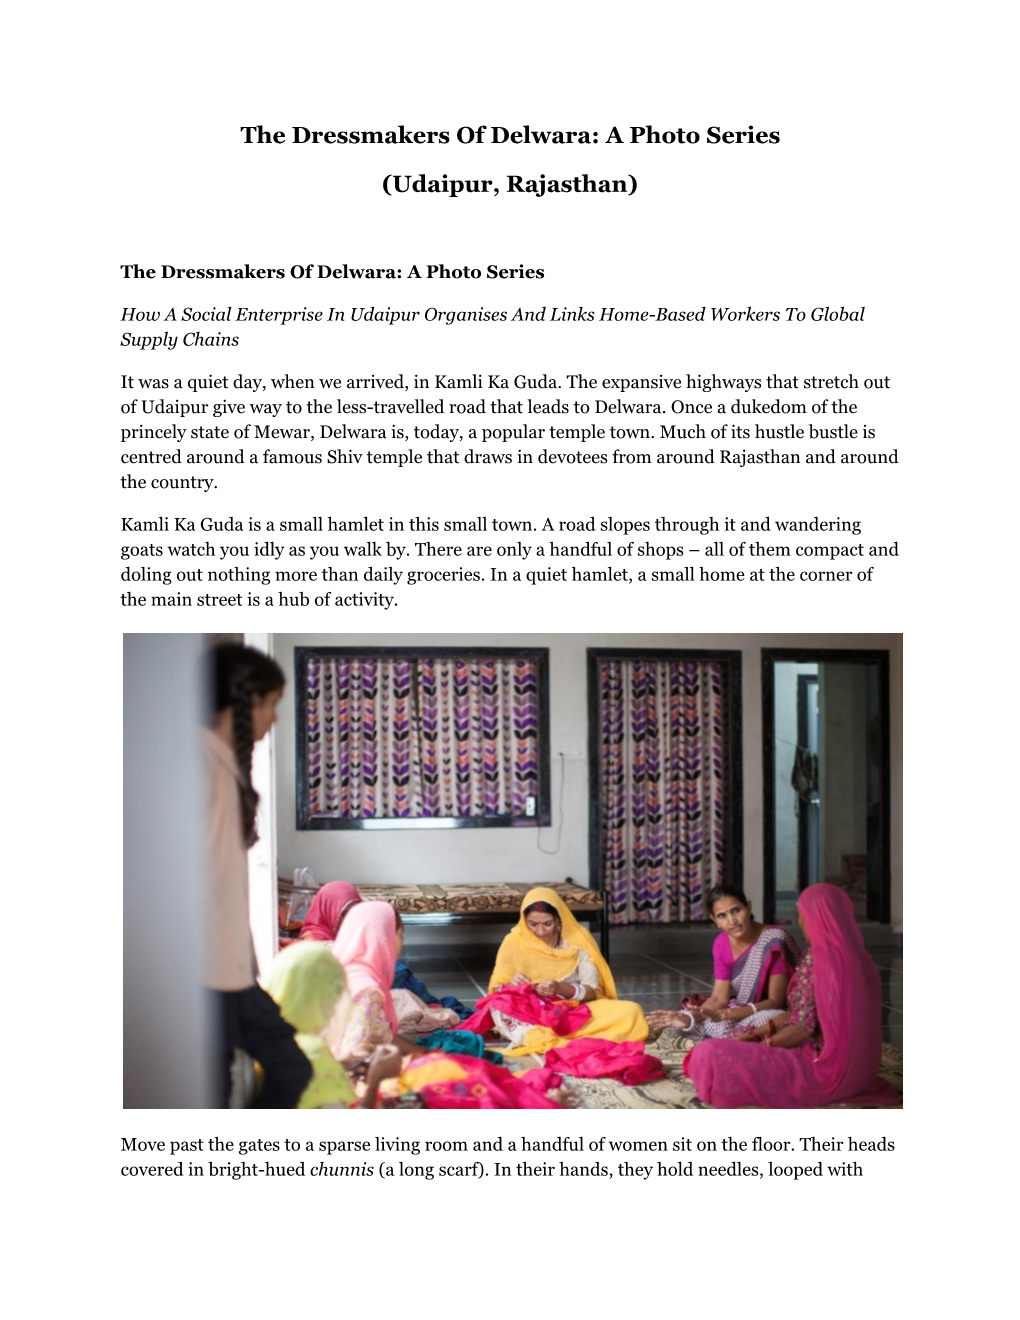 The Dressmakers of Delwara: a Photo Series (Udaipur, Rajasthan)